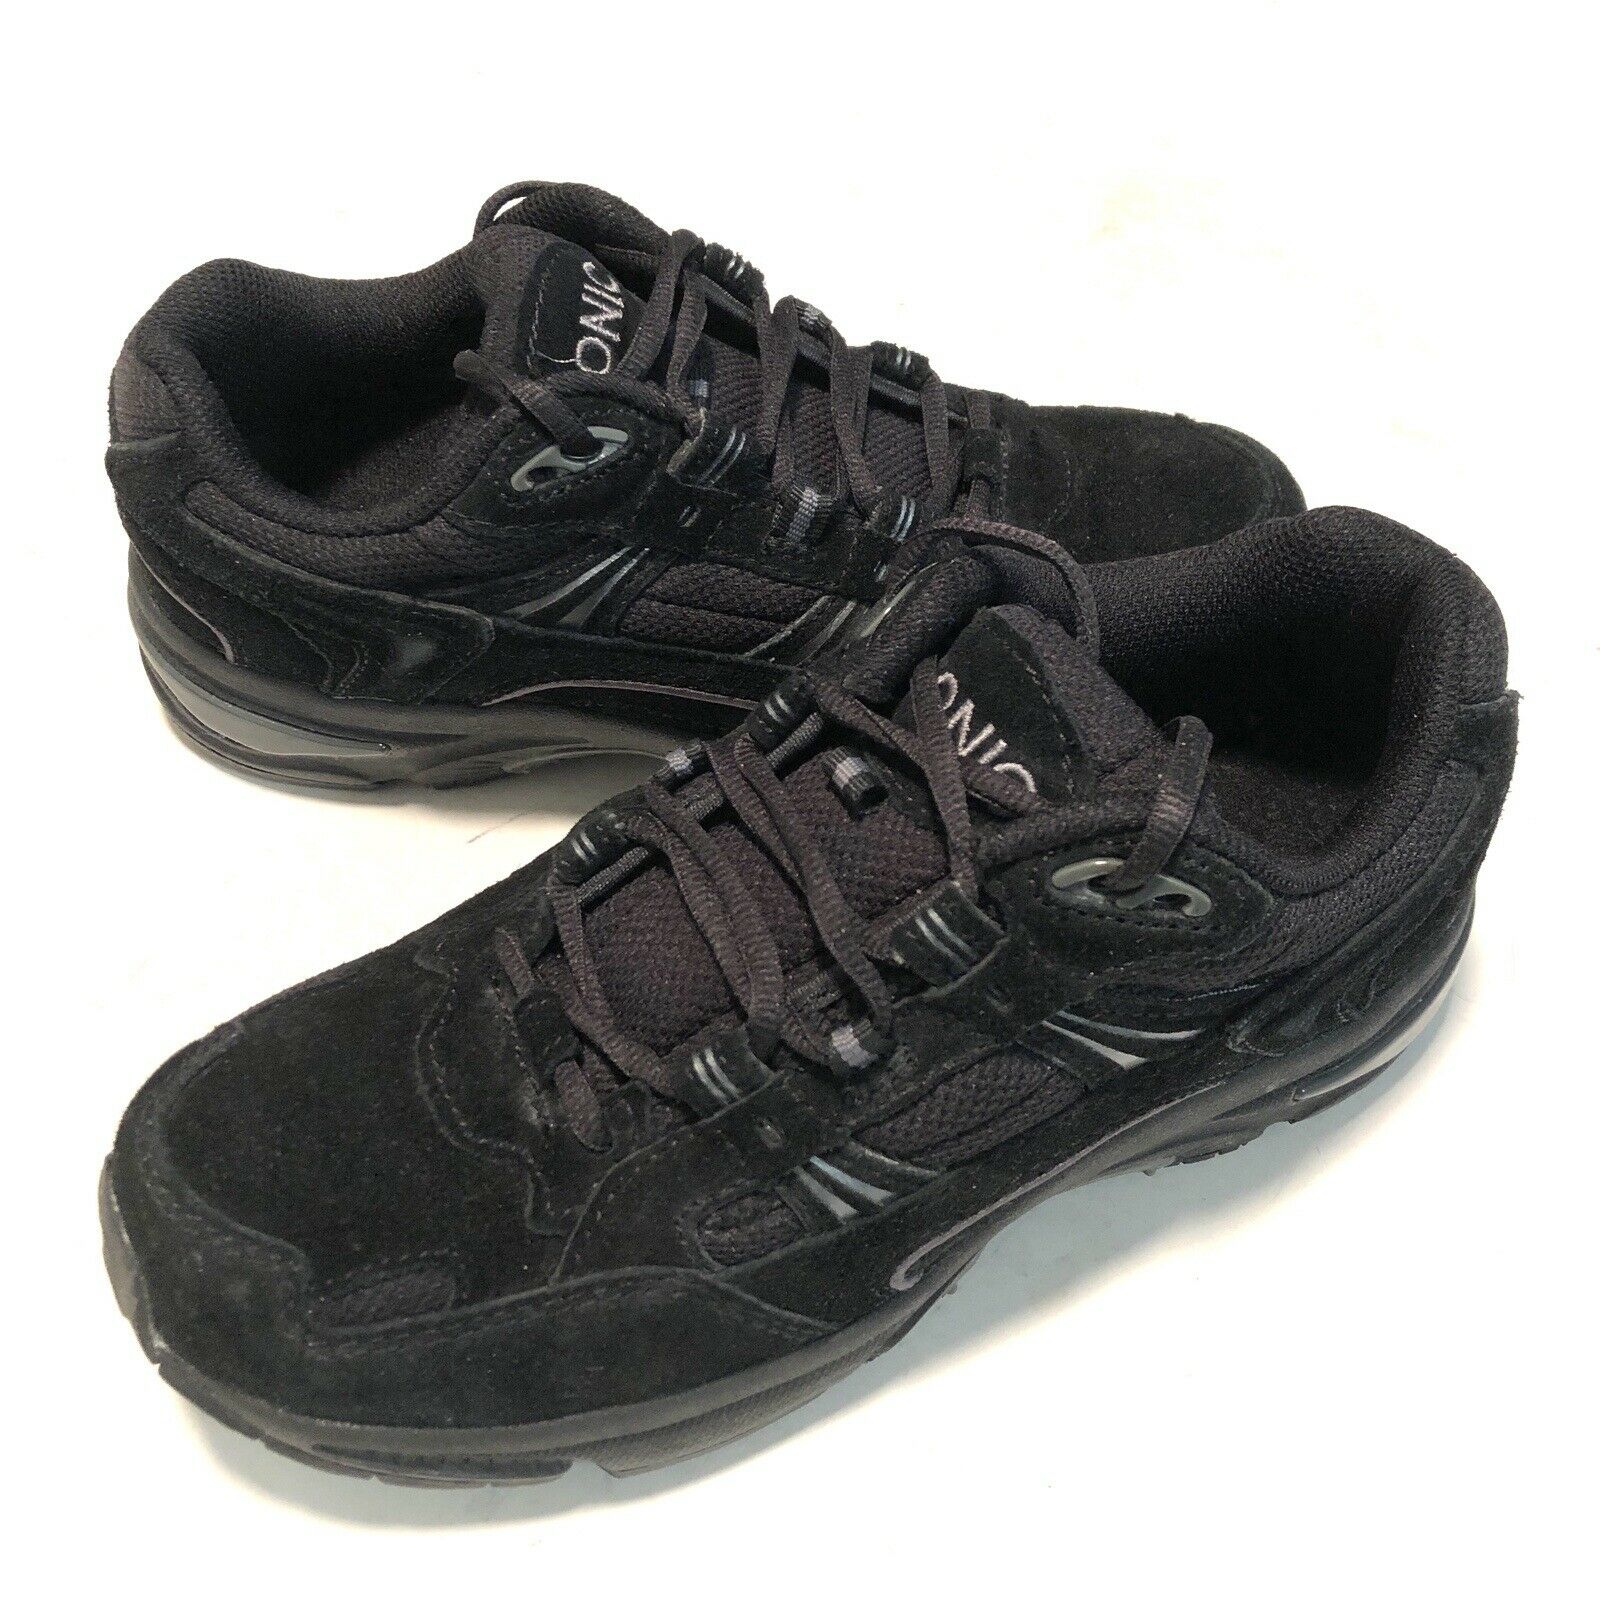 Vionic Walker Suede Plantar Fasciitis Black Comfort Walking Shoes Sz 6